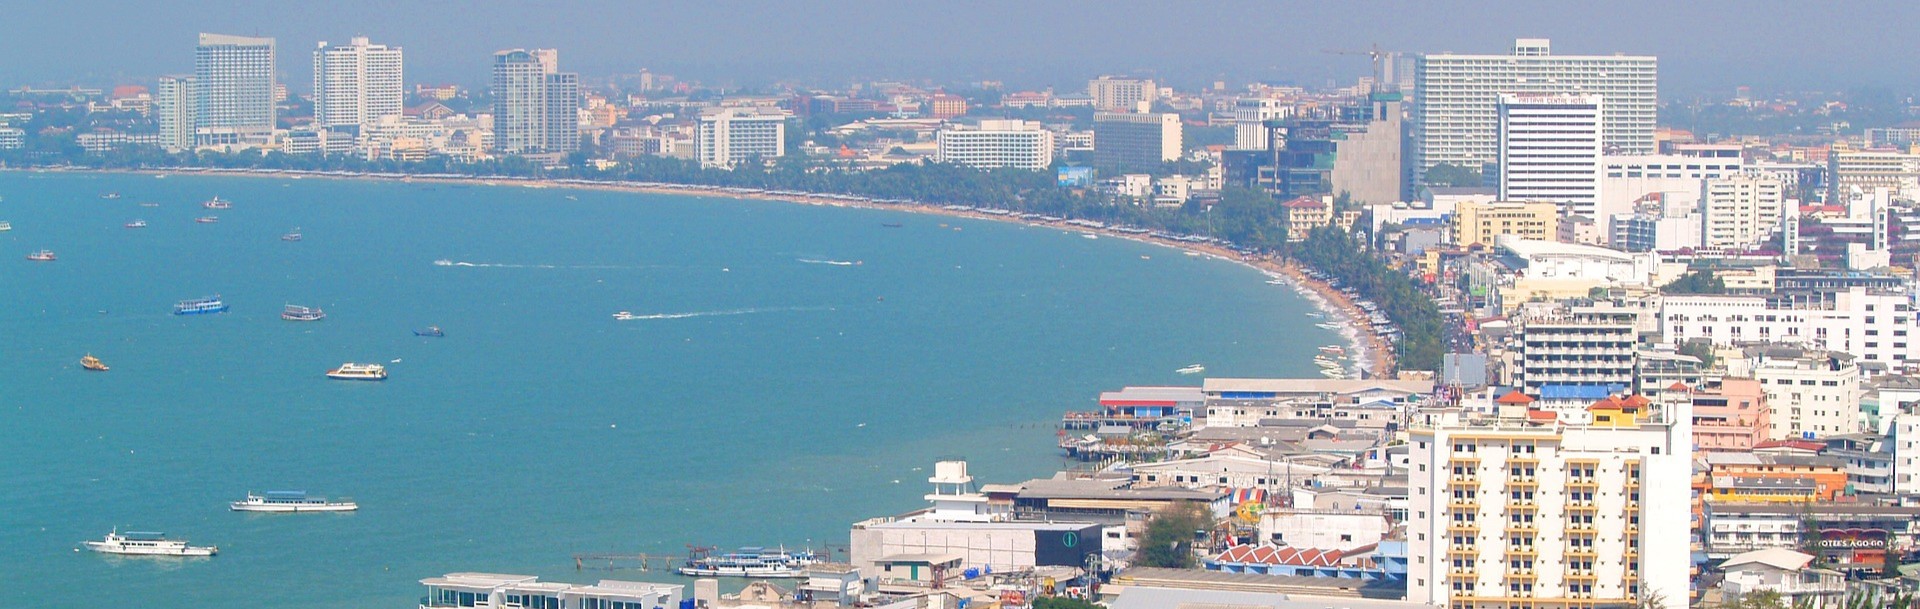 Pattaya 